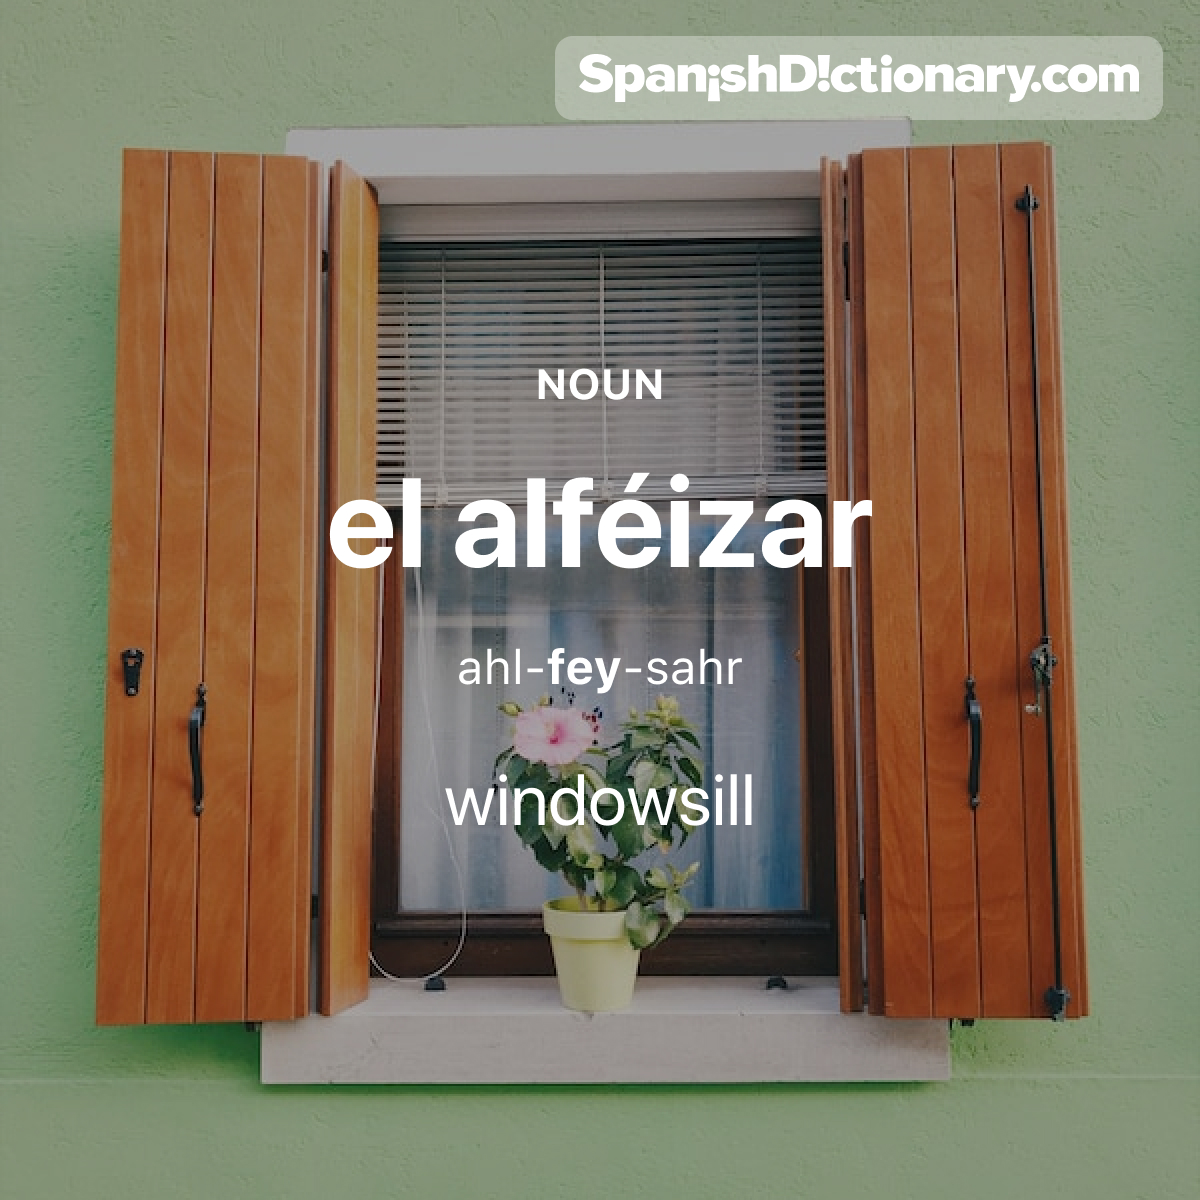 Today's #WordOfTheDay is 'alféizar.' 🏠🔲 For example: Hay una pequeña planta en el alféizar. - There's a little plant on the windowsill.
.
.
.
#EstudiaEspañol #StudySpanish #AprendeEspañol #LearnSpanish #Español #Spanish #LearningSpanish #PalabraDelDia #alféizar #windowsill